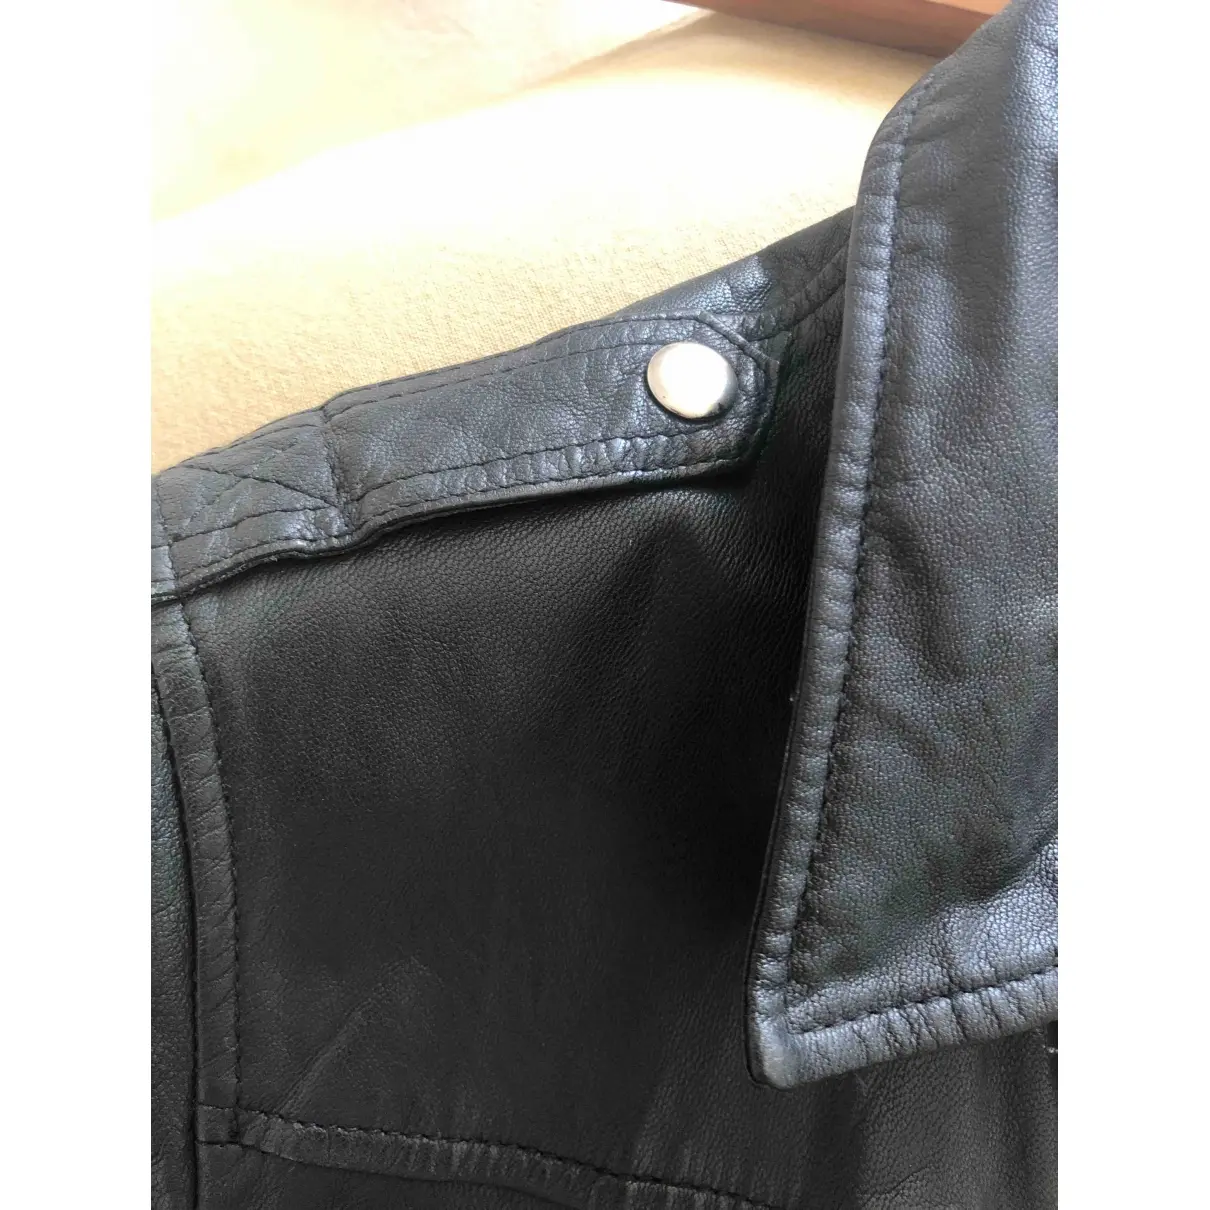 Buy Mangano Leather vest online